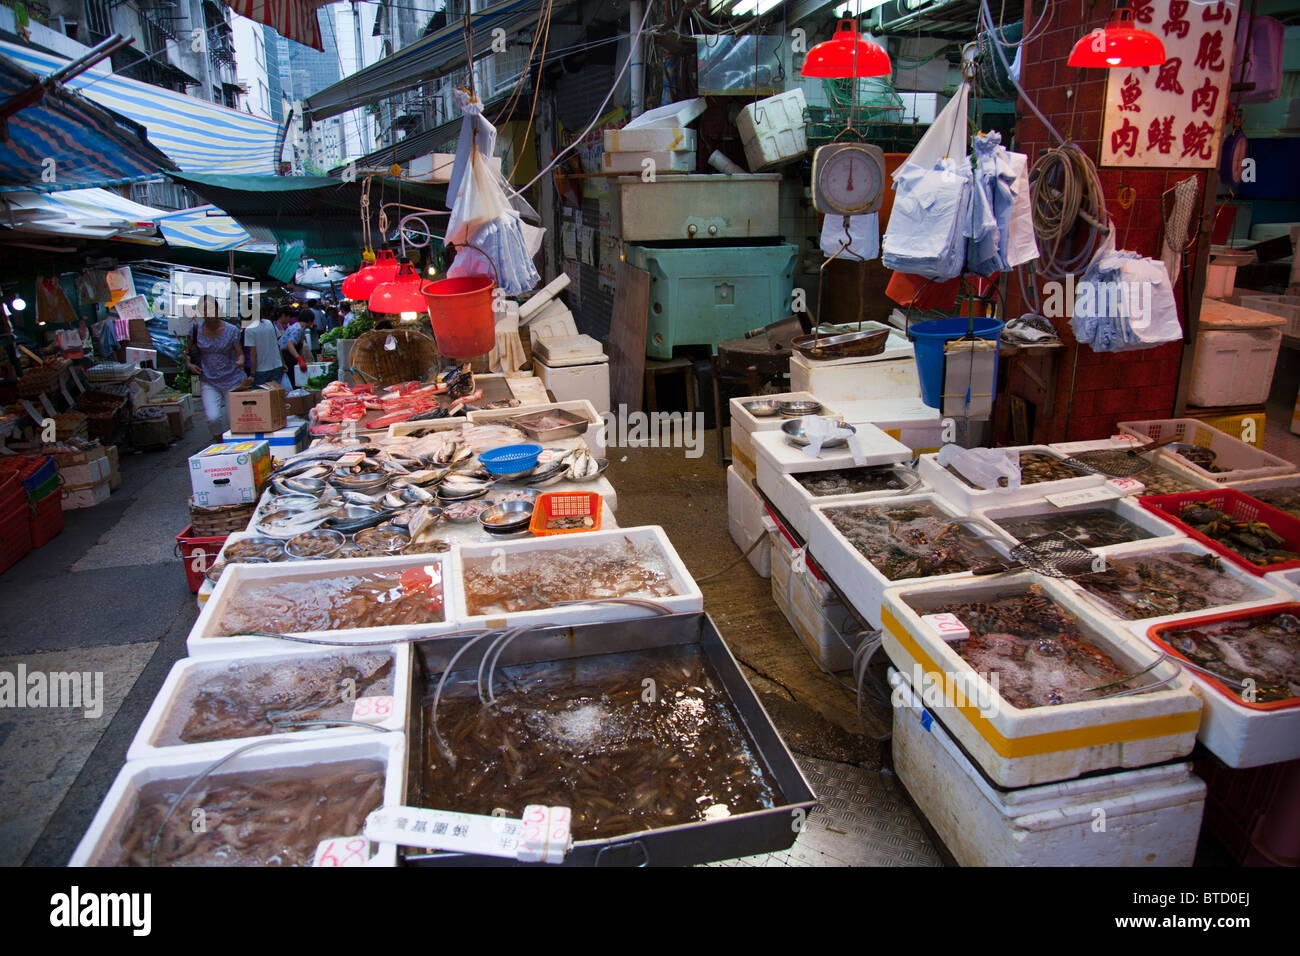 Typical fish market stall on Hong Kong island selling live fish and shellfish Stock Photo